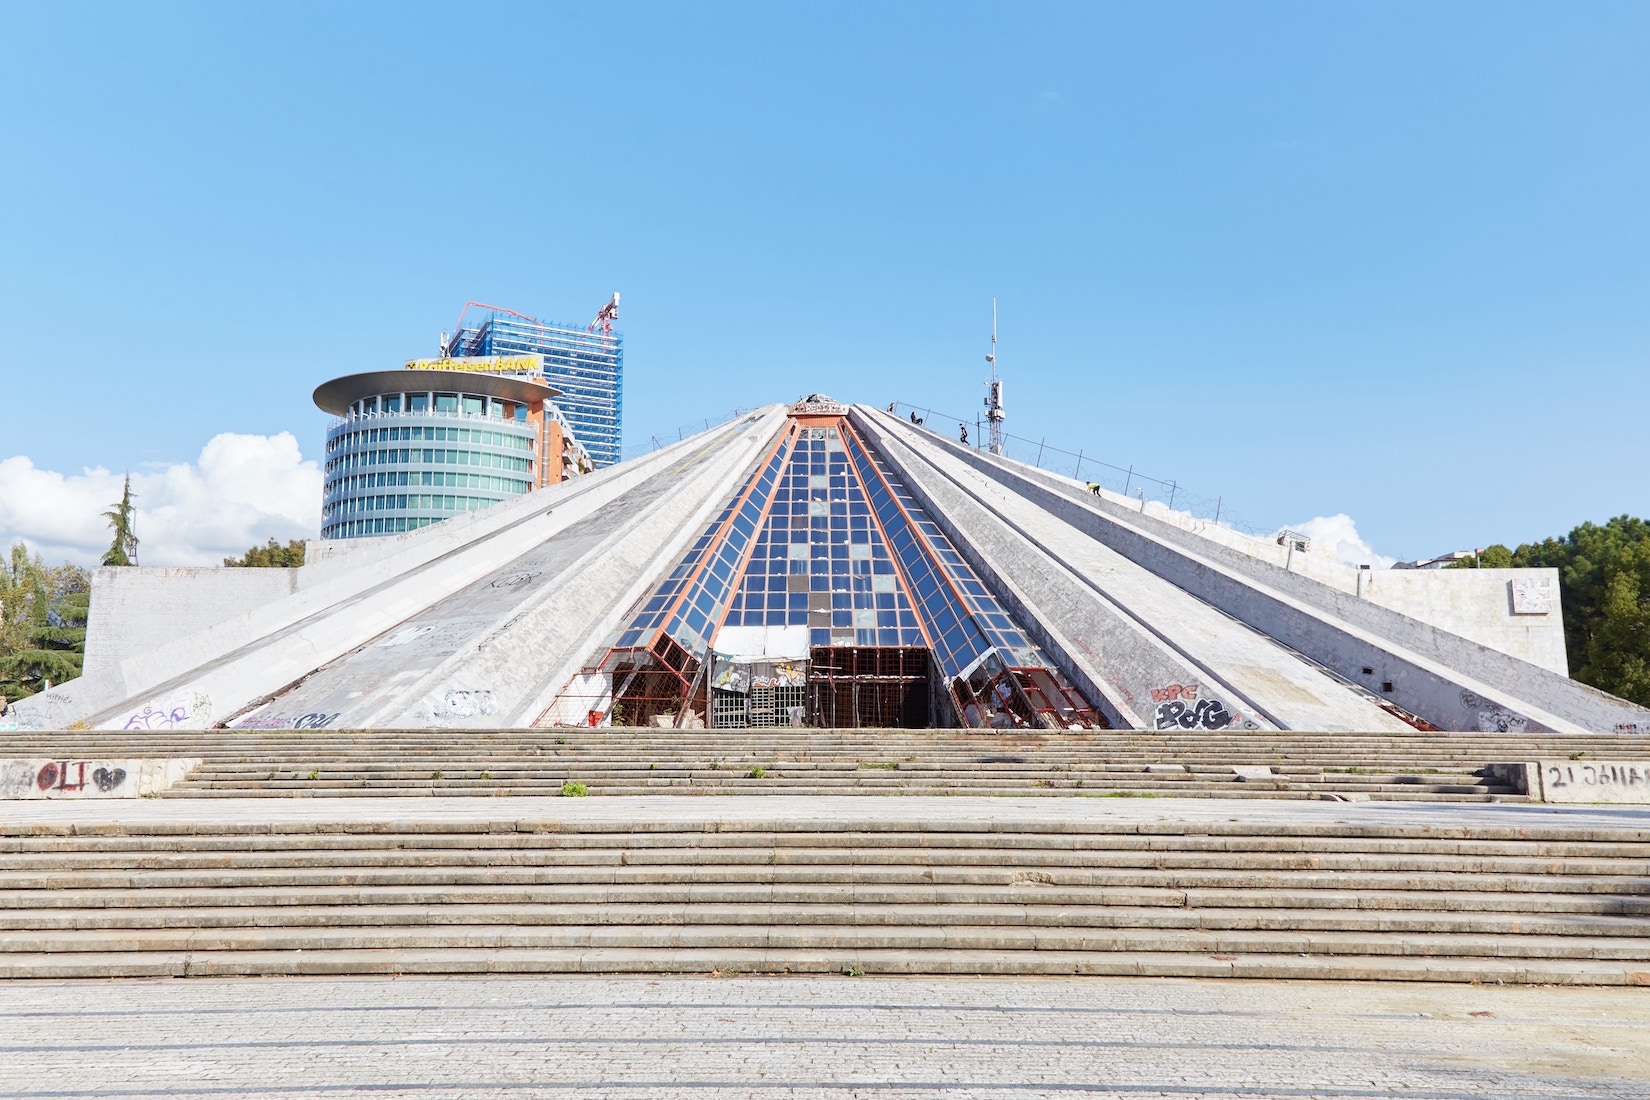 Pyramid of Tirana Guide